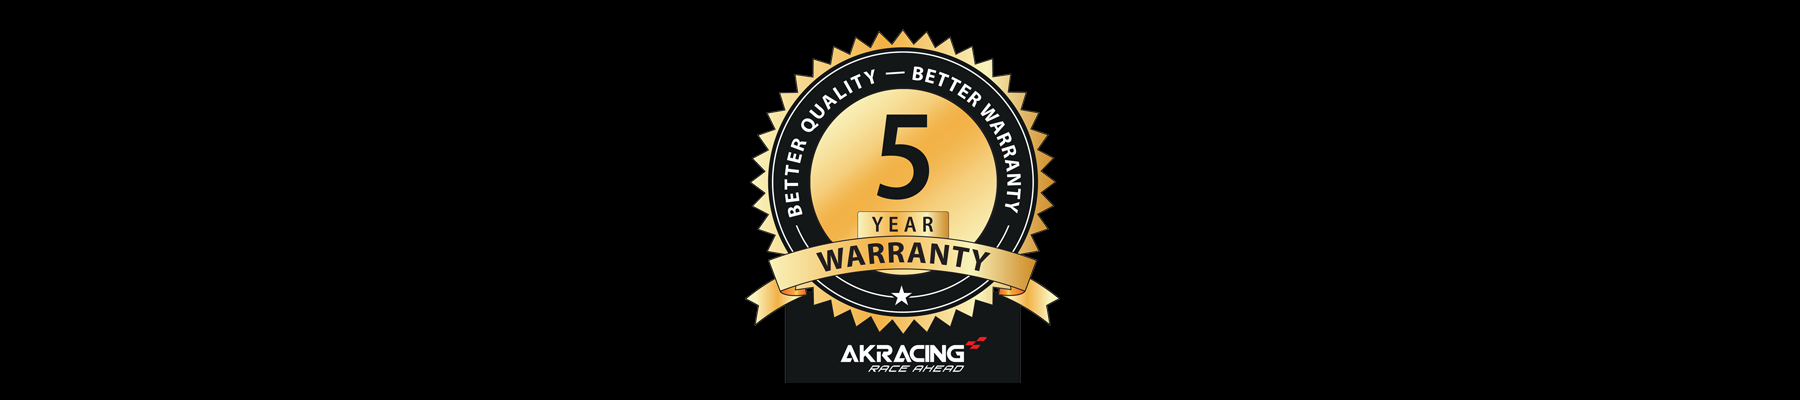 AK Racing 5 Year Warranty